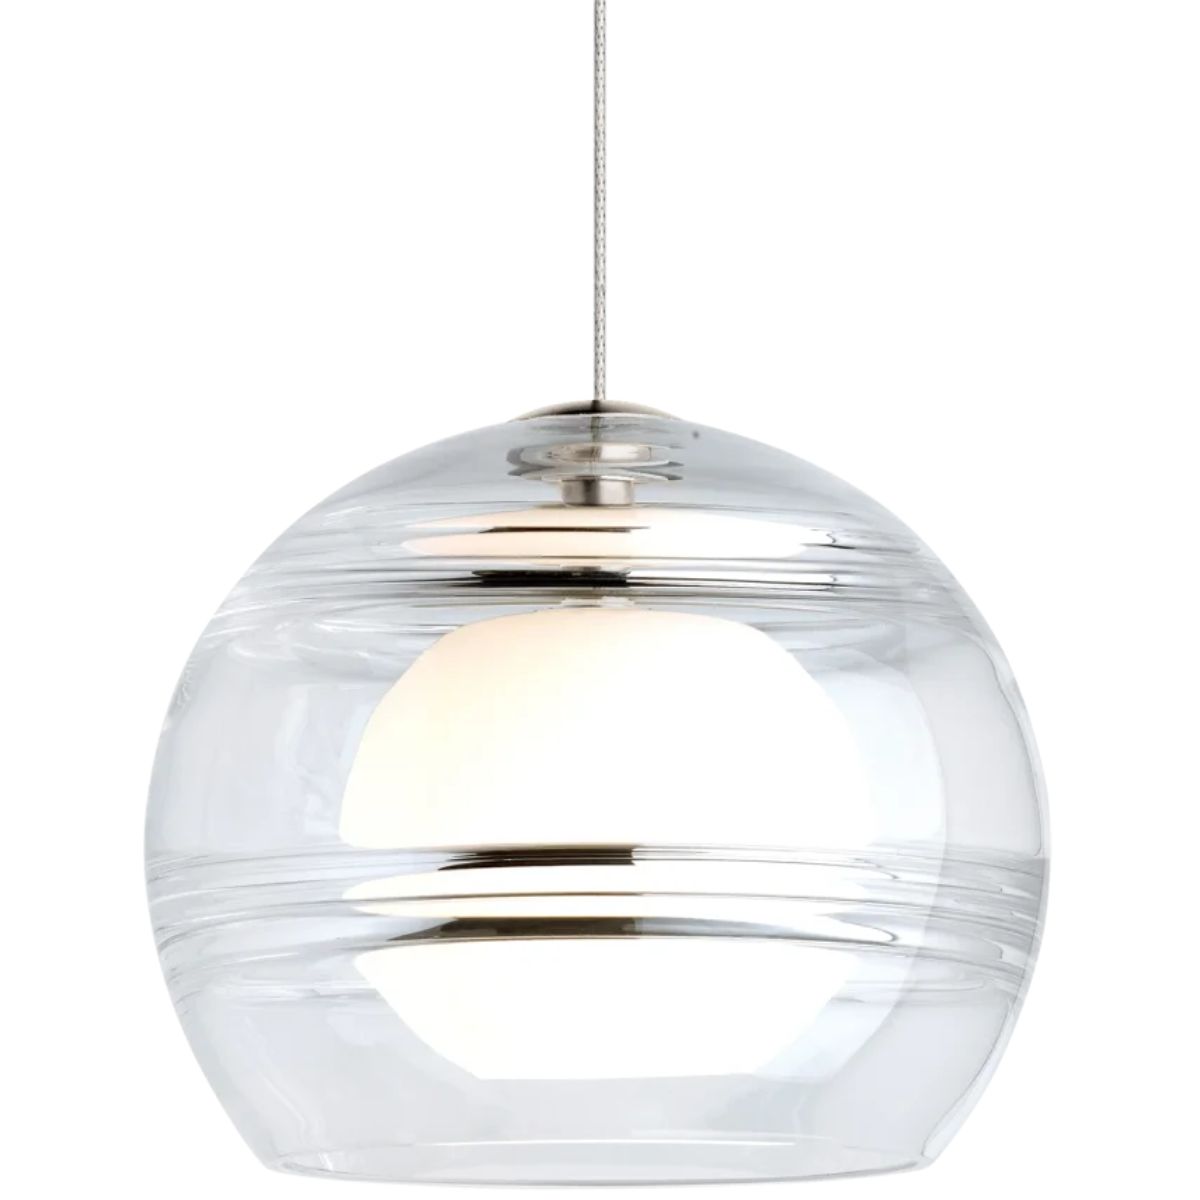 Sedona 6 in. Monopoint Halogen Pendant Light 420 lumens Satin Nickel finish with Clear glass